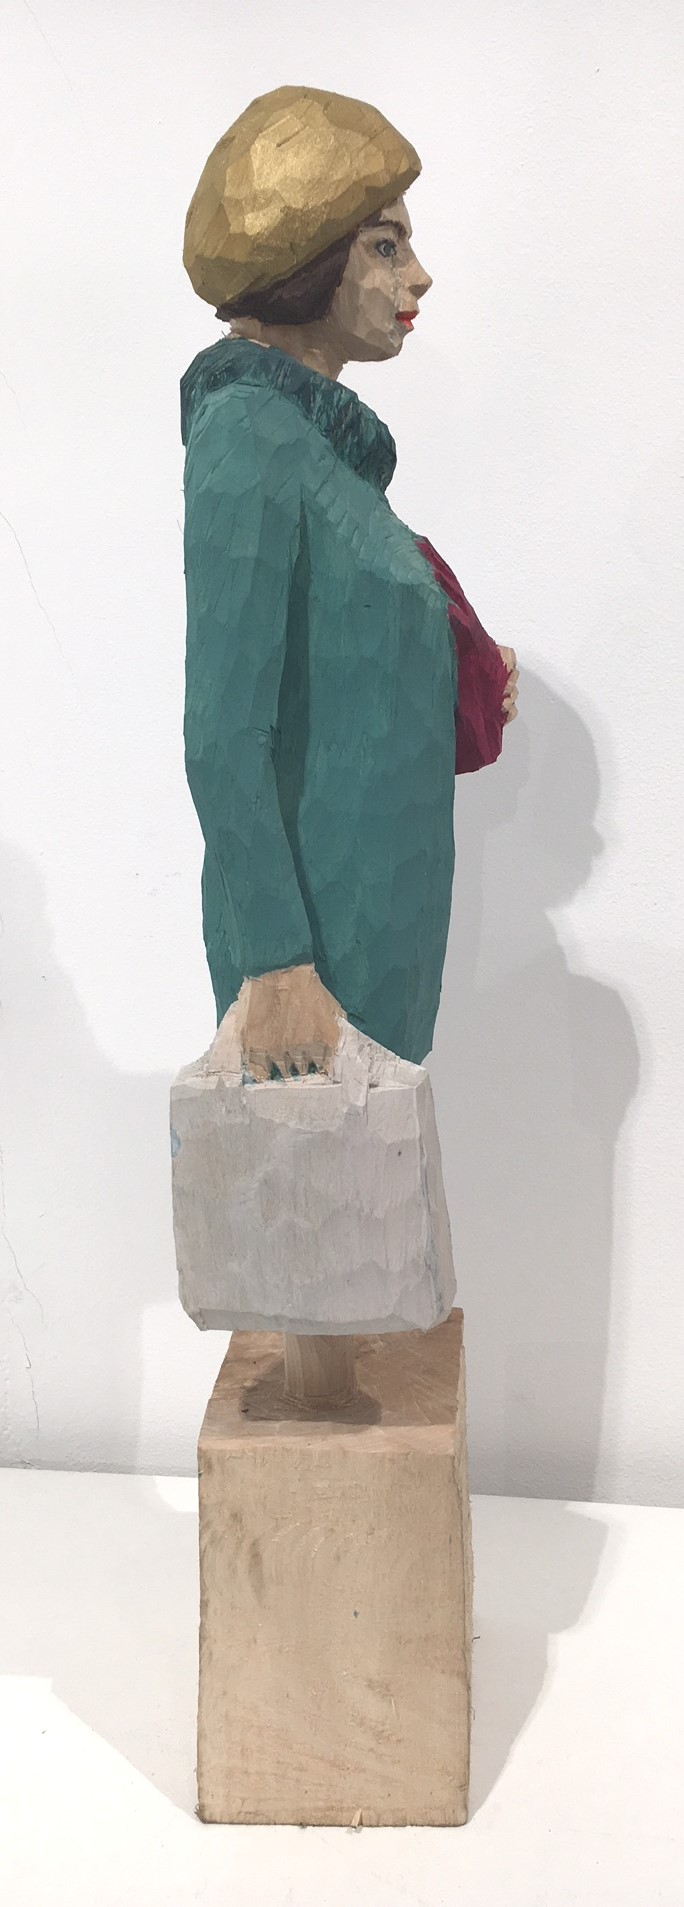 Edekafrau (1128) mit Handschuh